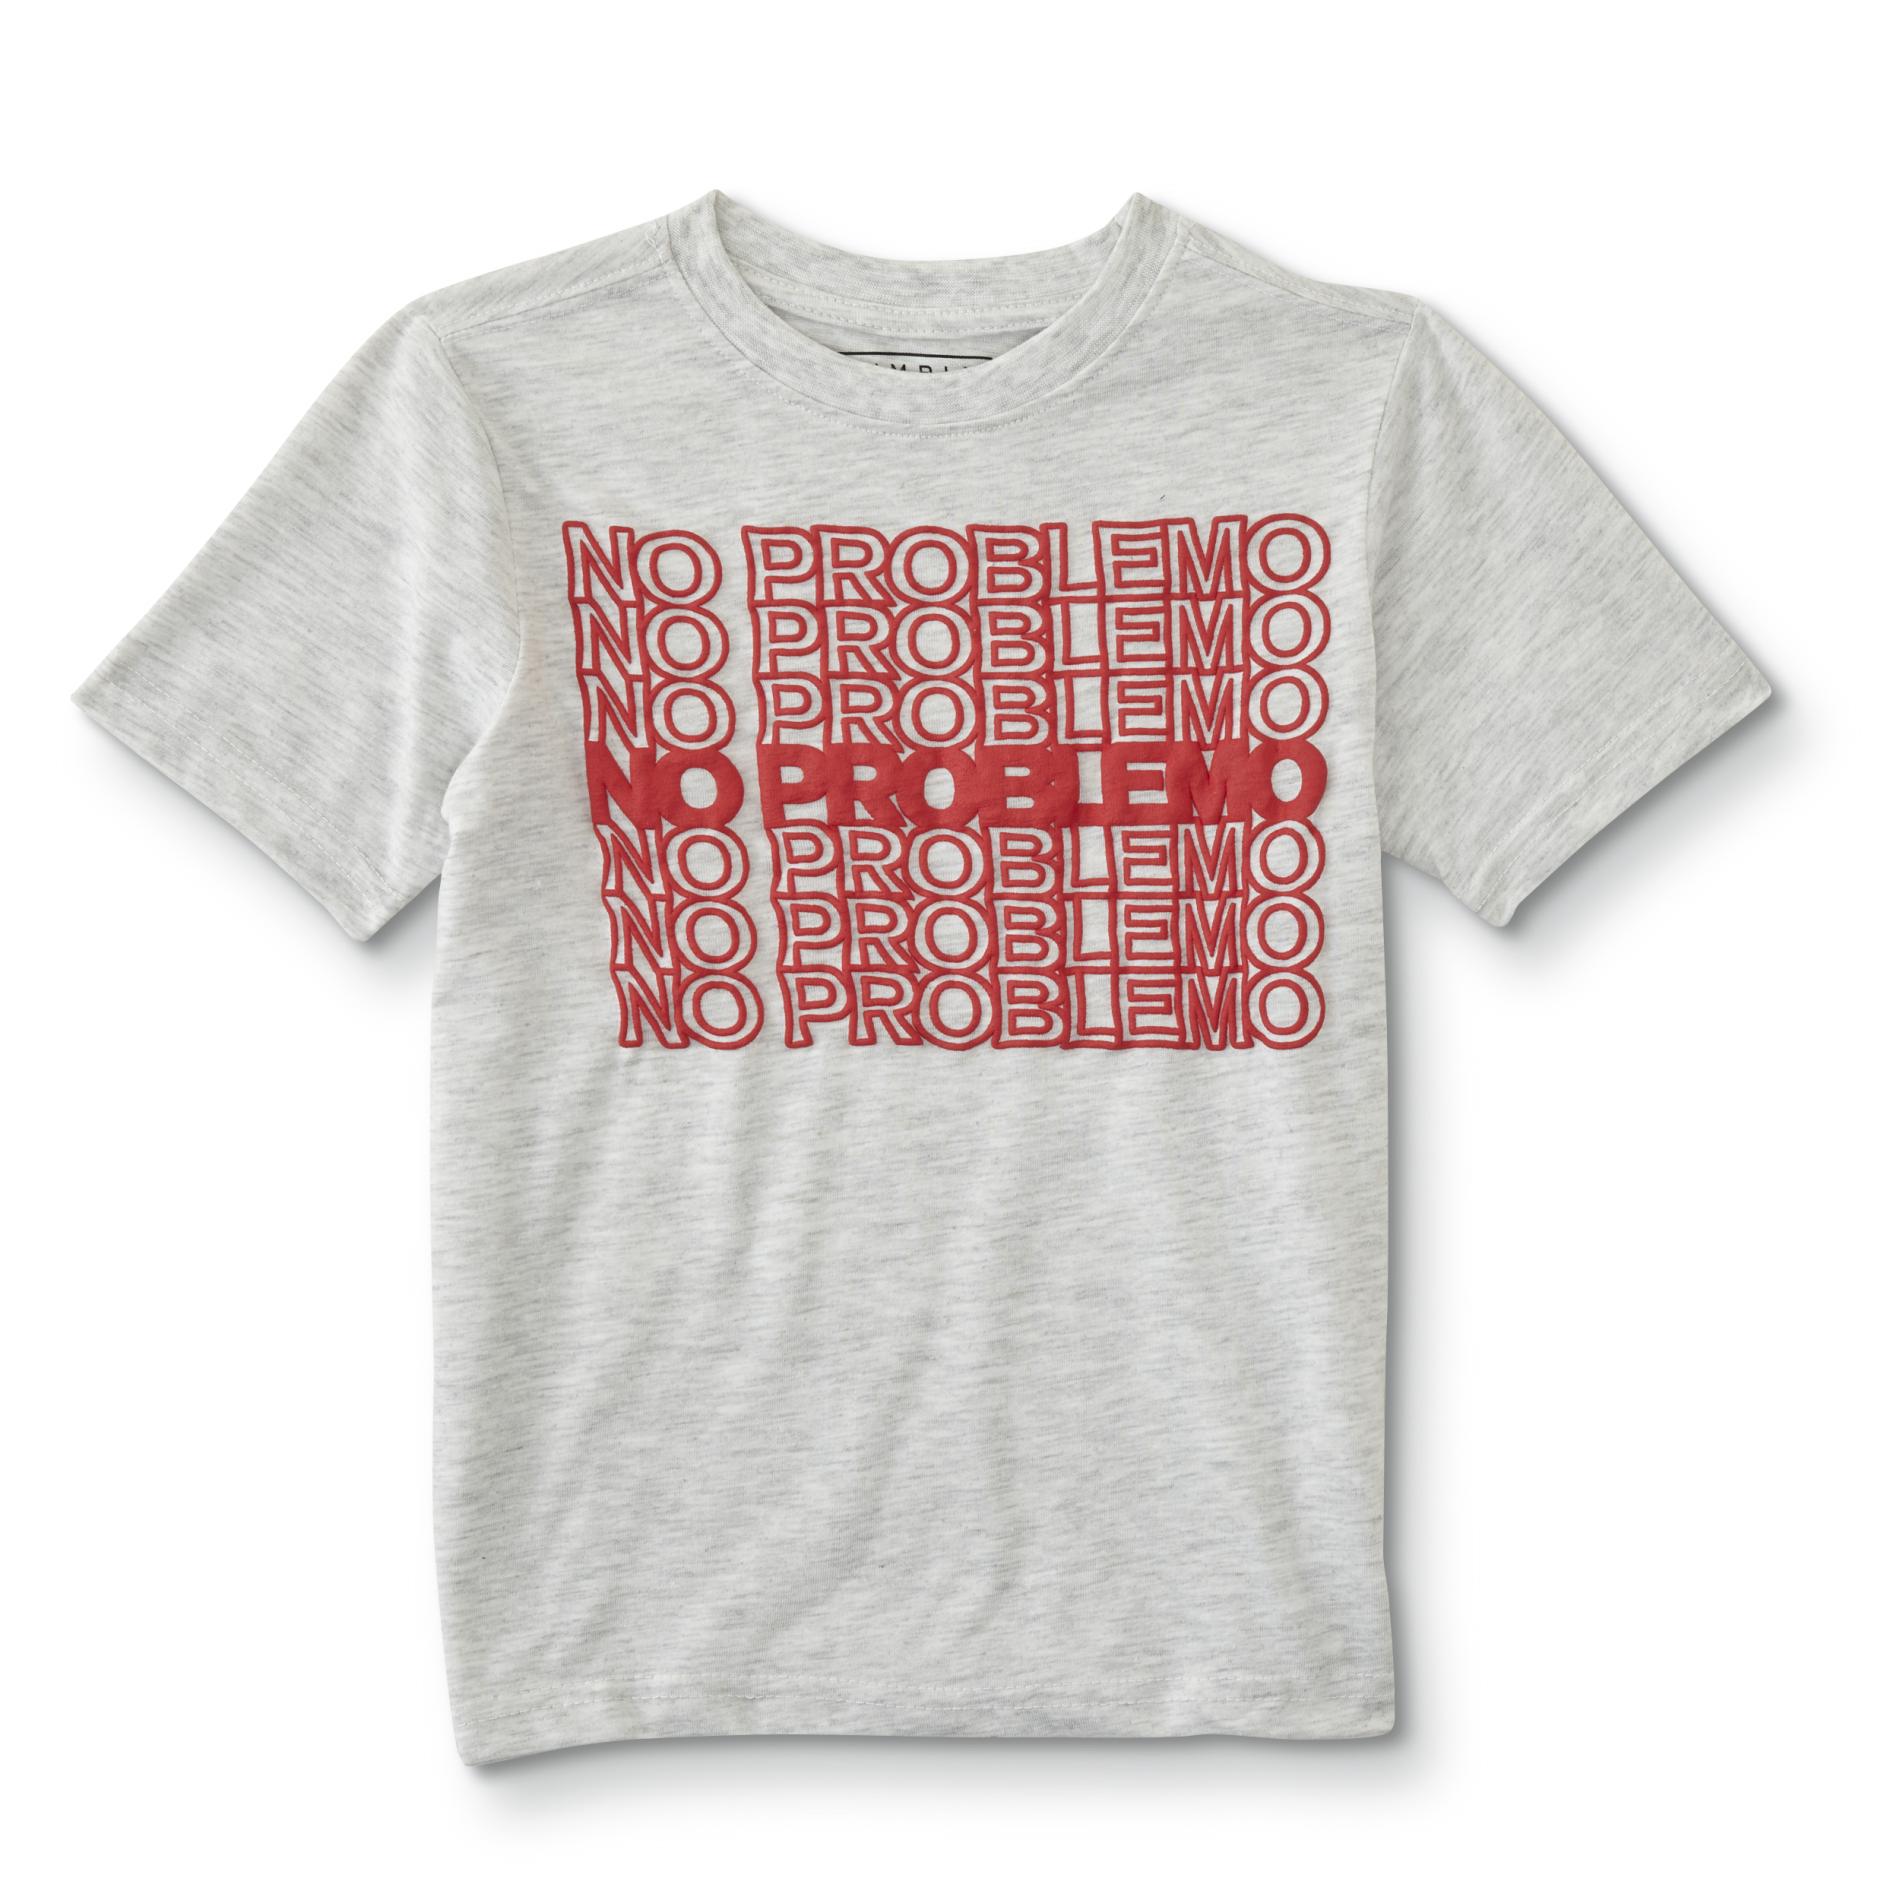 Montage Boys' Graphic T-Shirt - No Problemo